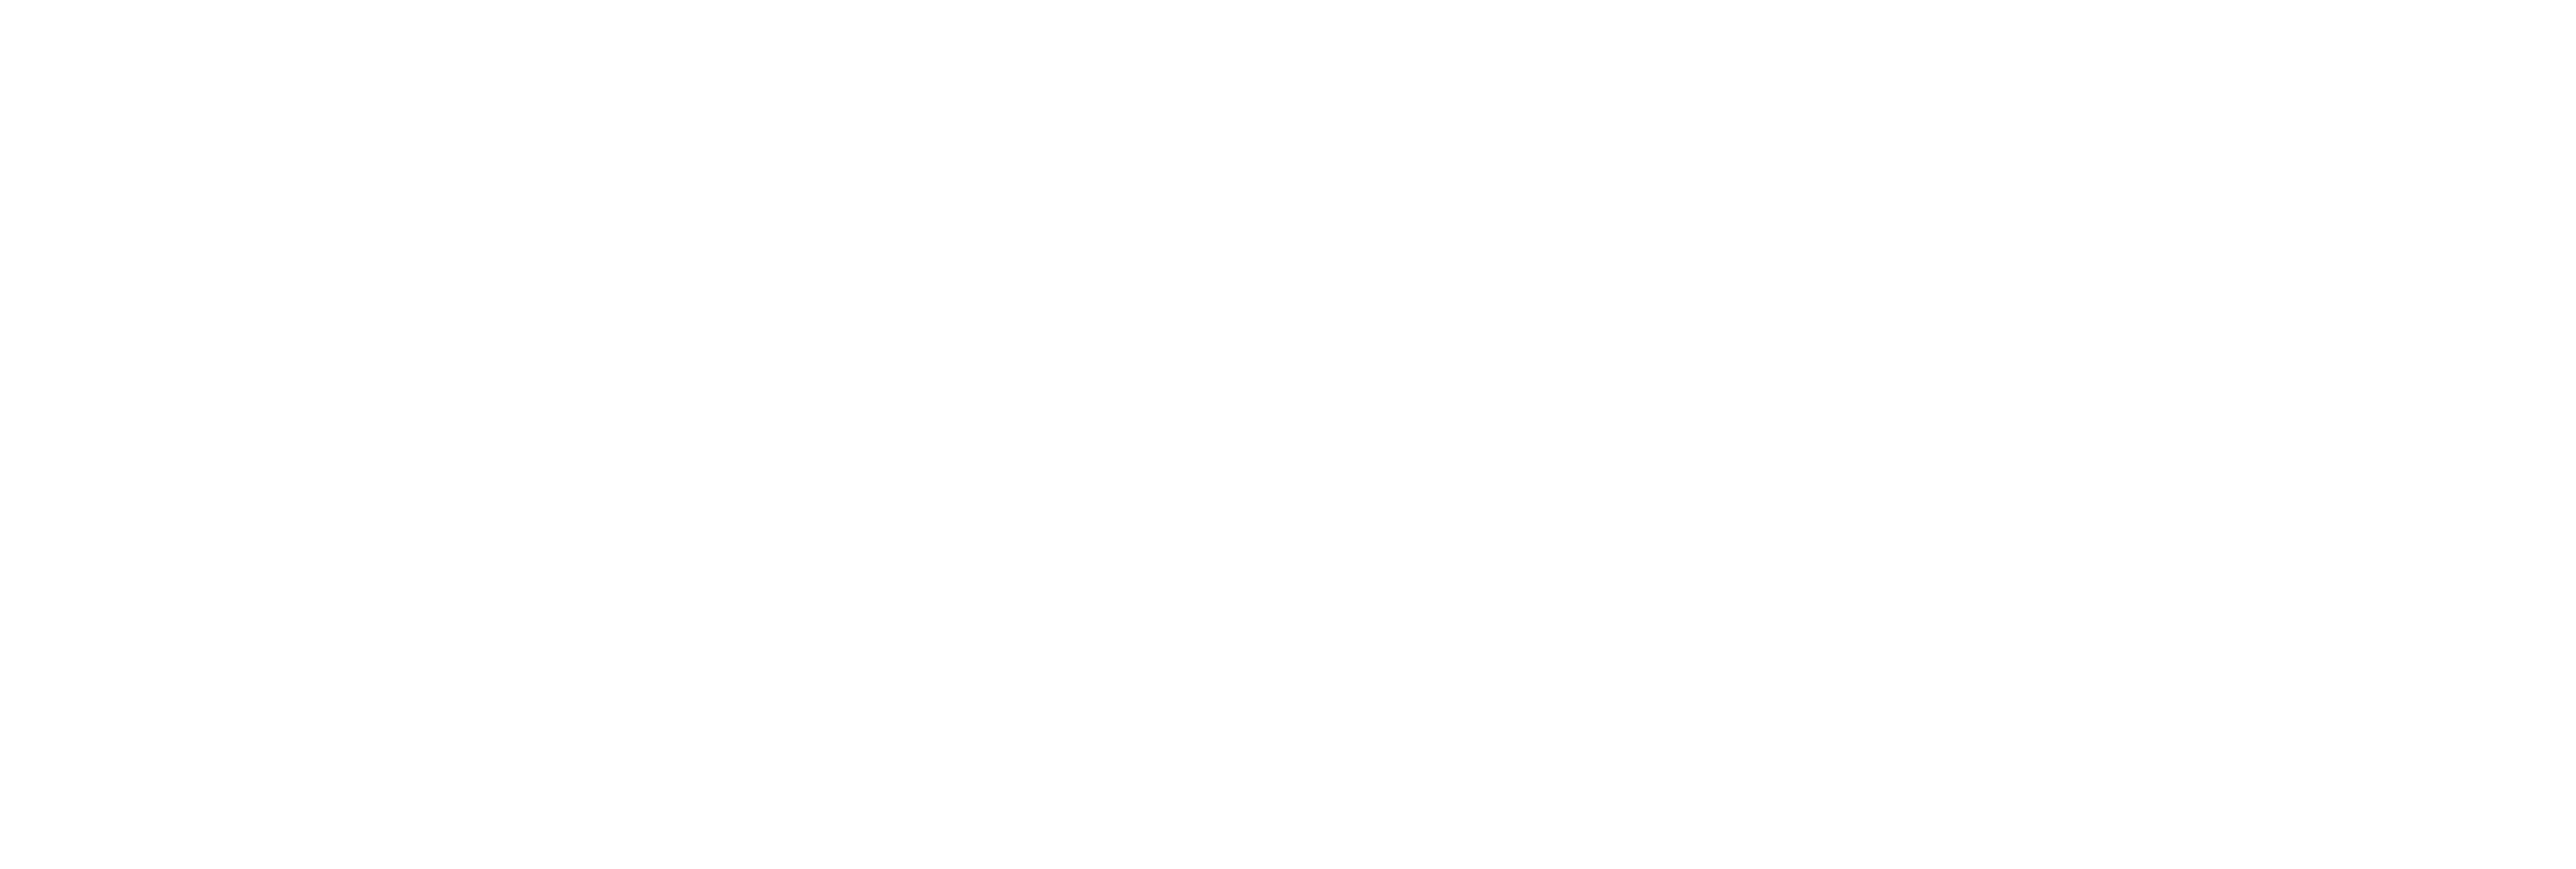 Jameson lounge logo